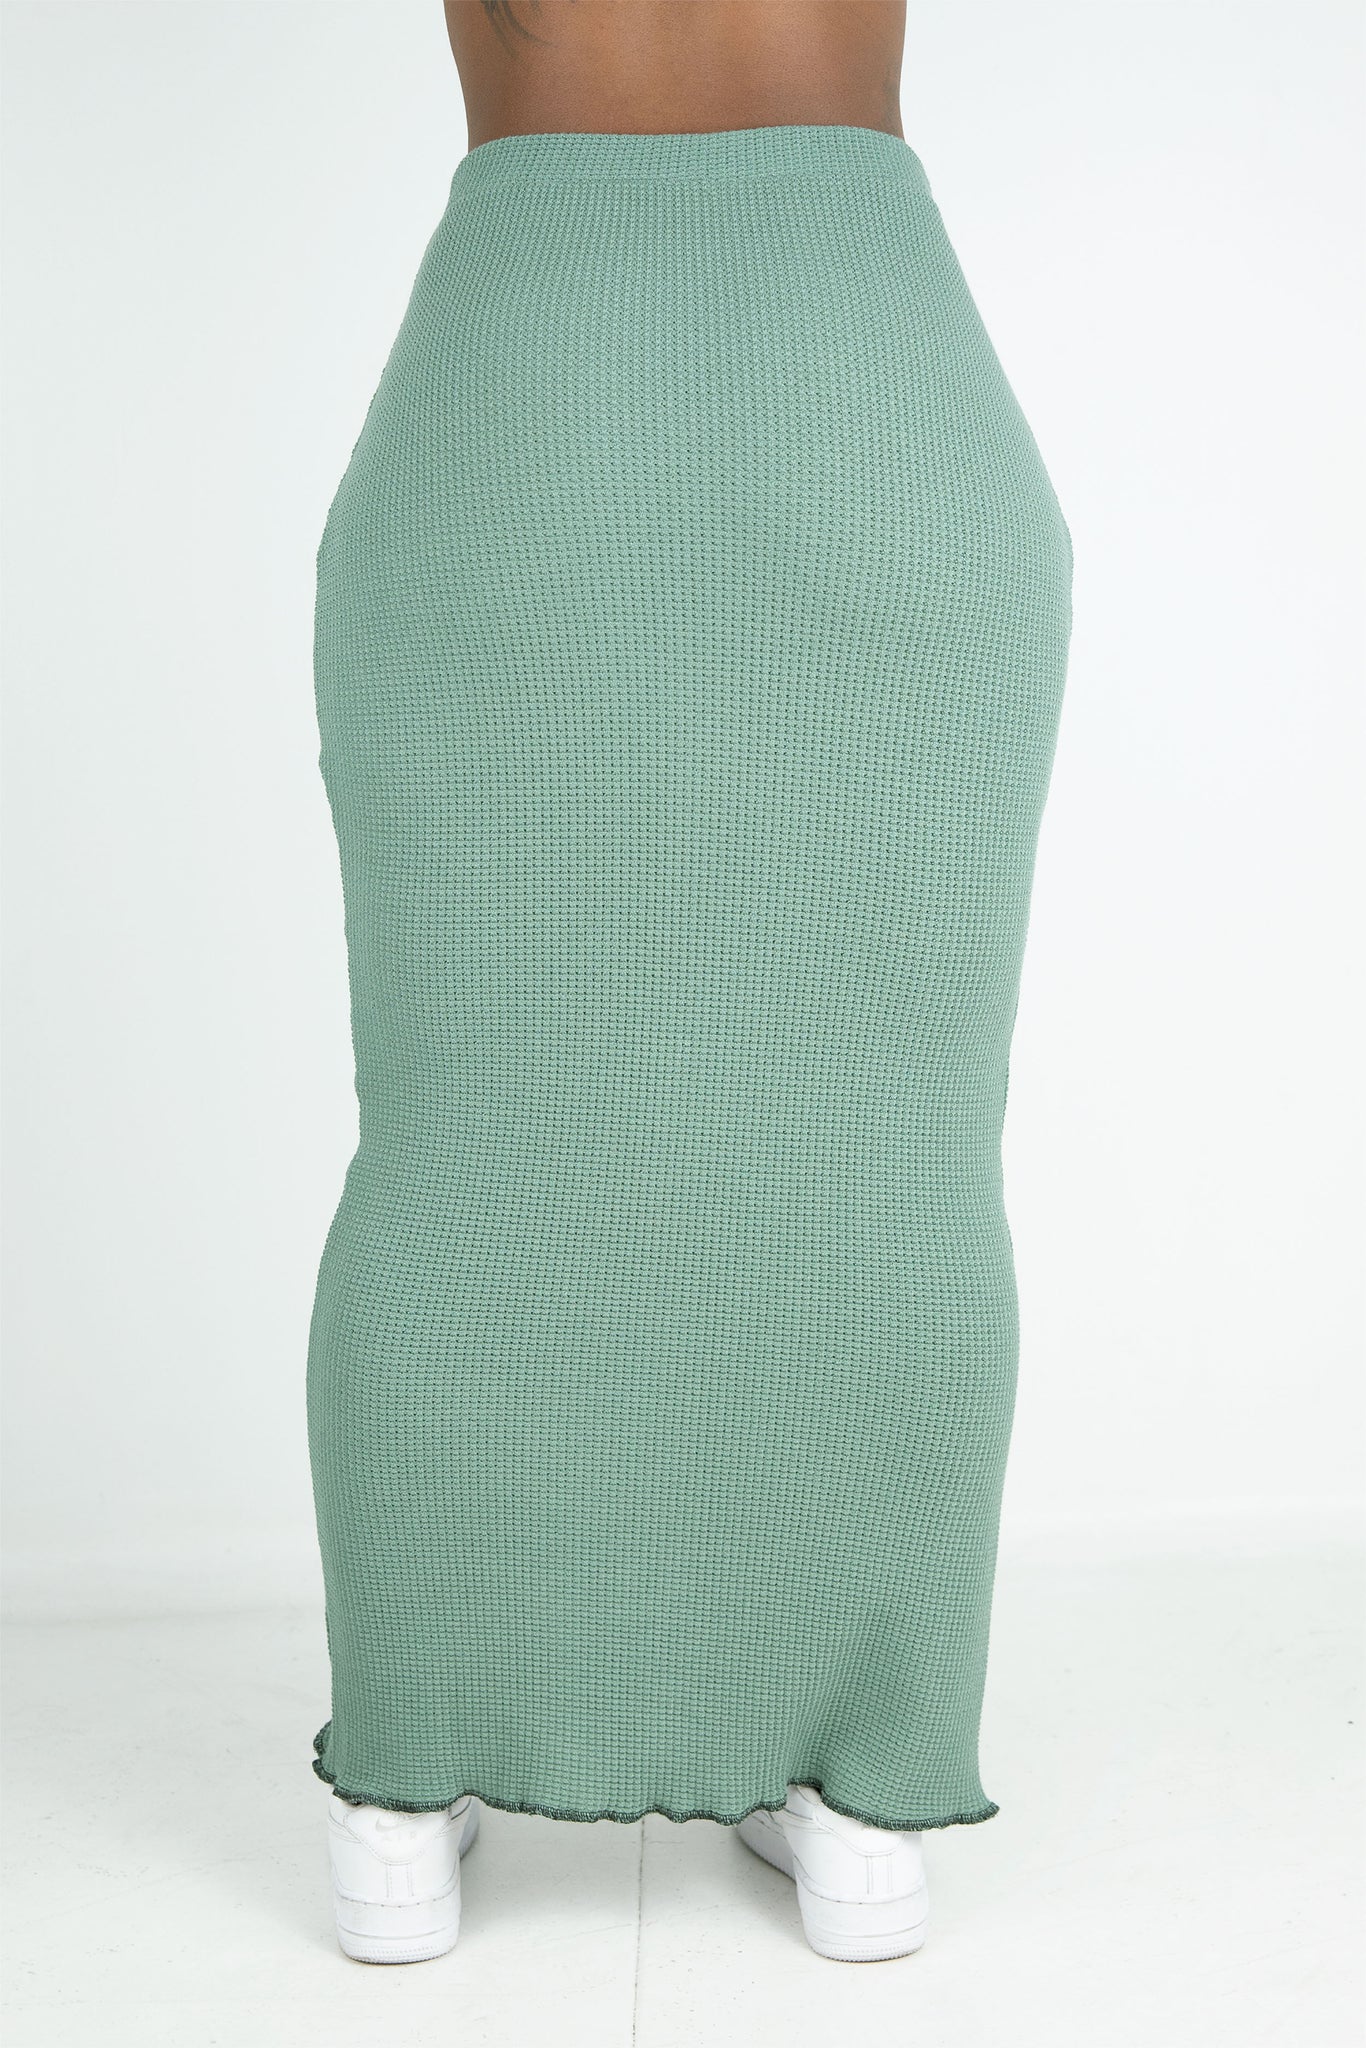 GRACIE Skirt (Seafoam)